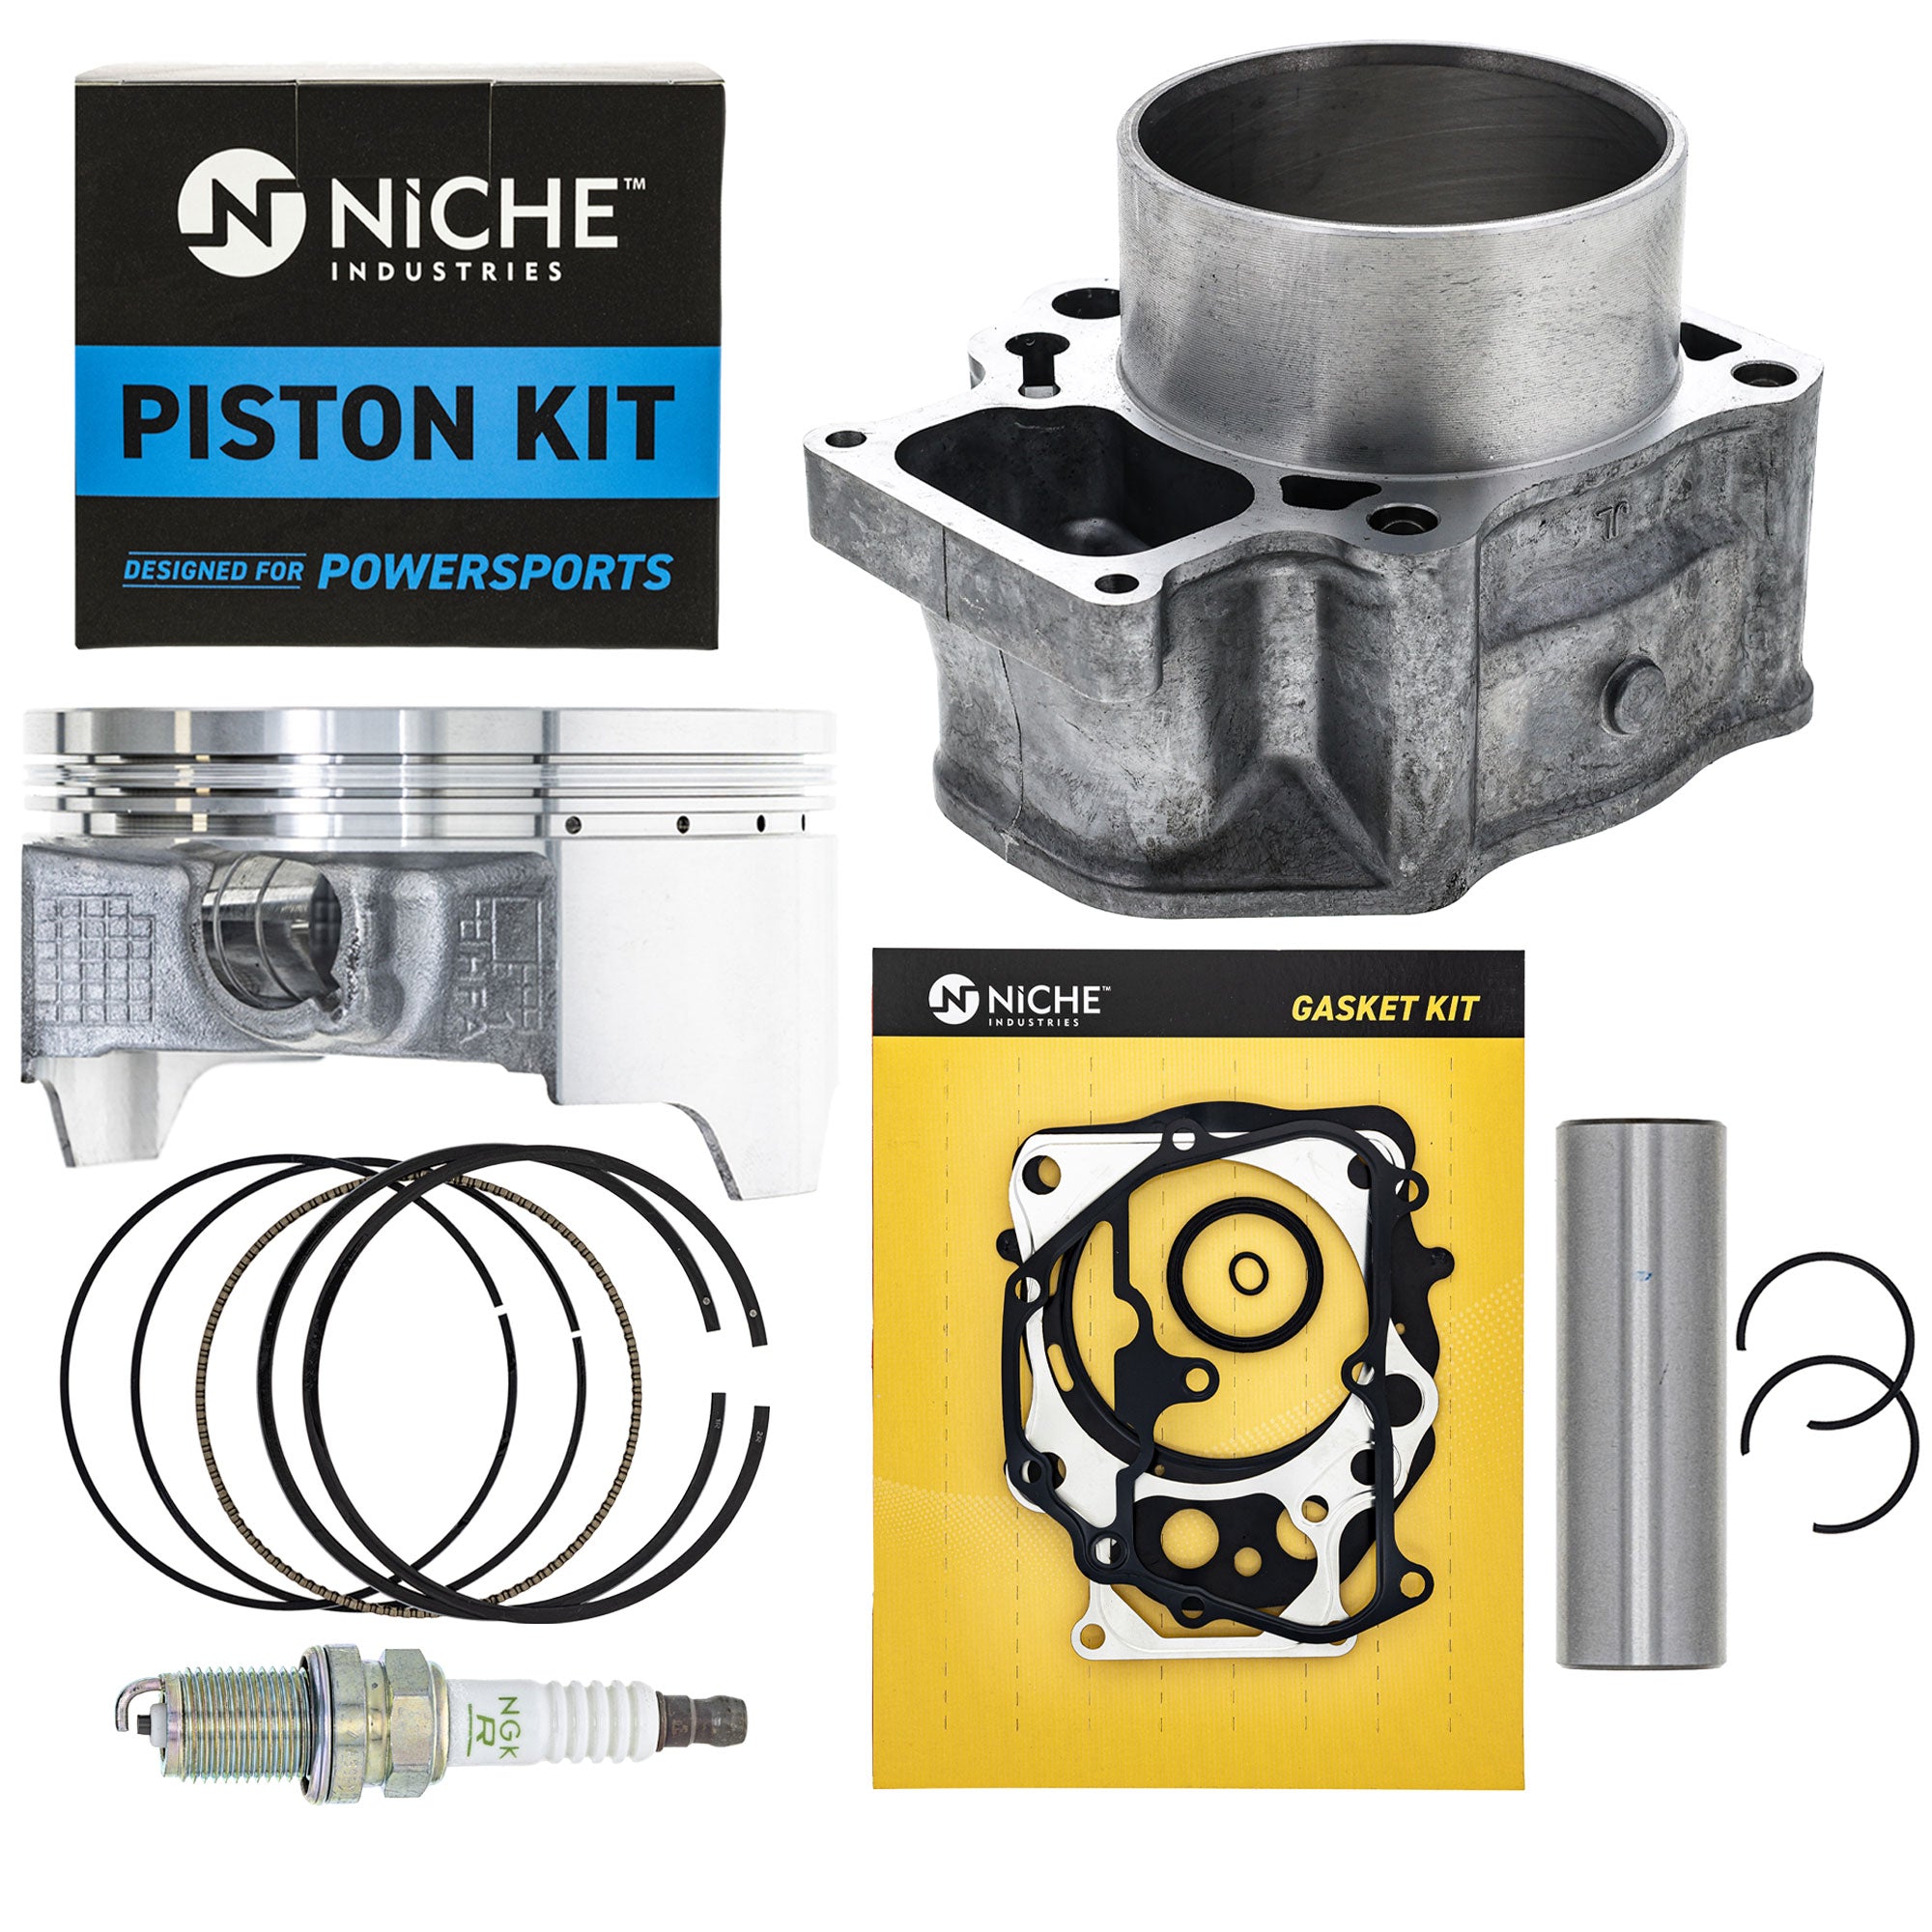 Piston Gasket Spark Plug Kit for Pioneer FourTrax NICHE MK1011879